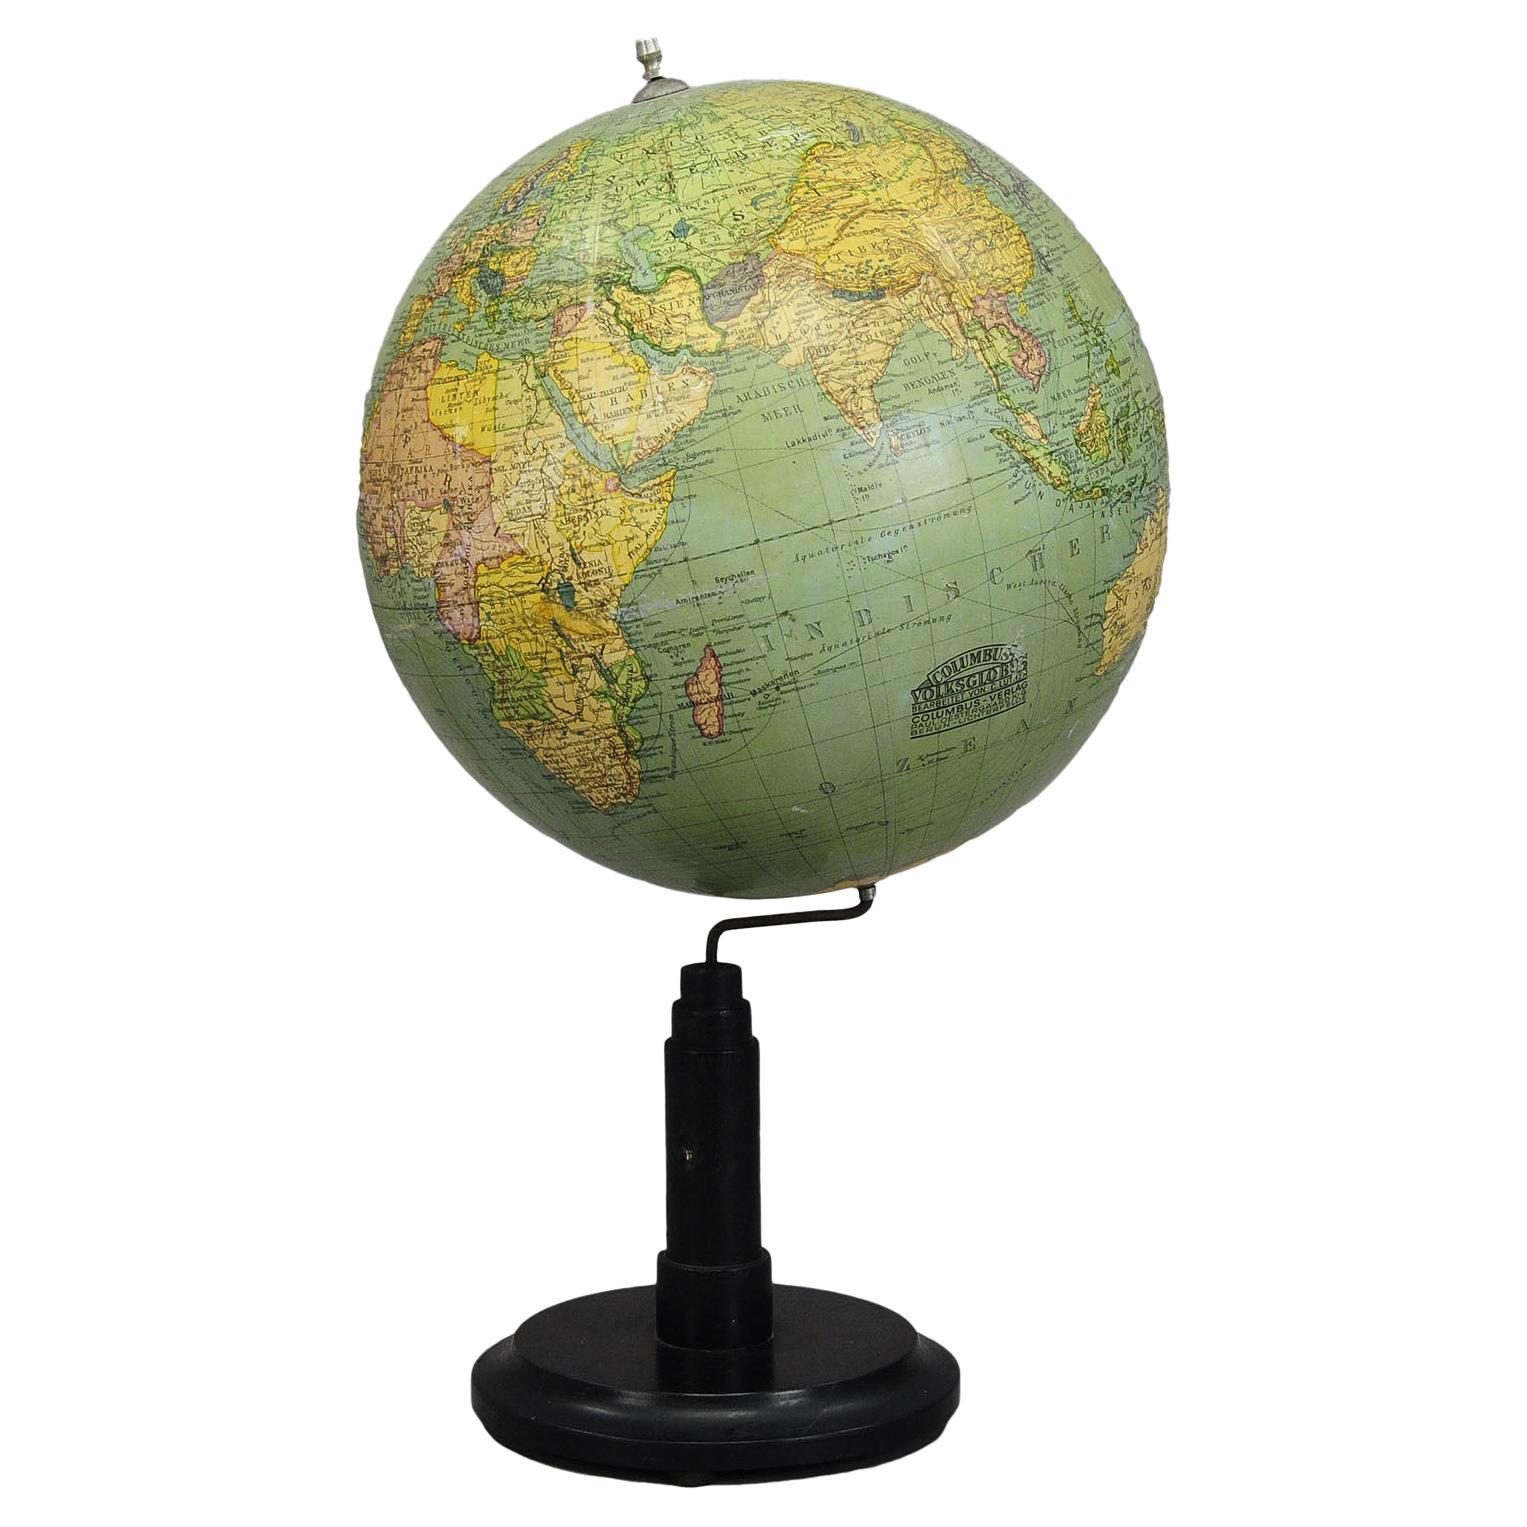 Columbus Earth Globe by Paul Oestergaard - Berlin ca. 1900 For Sale